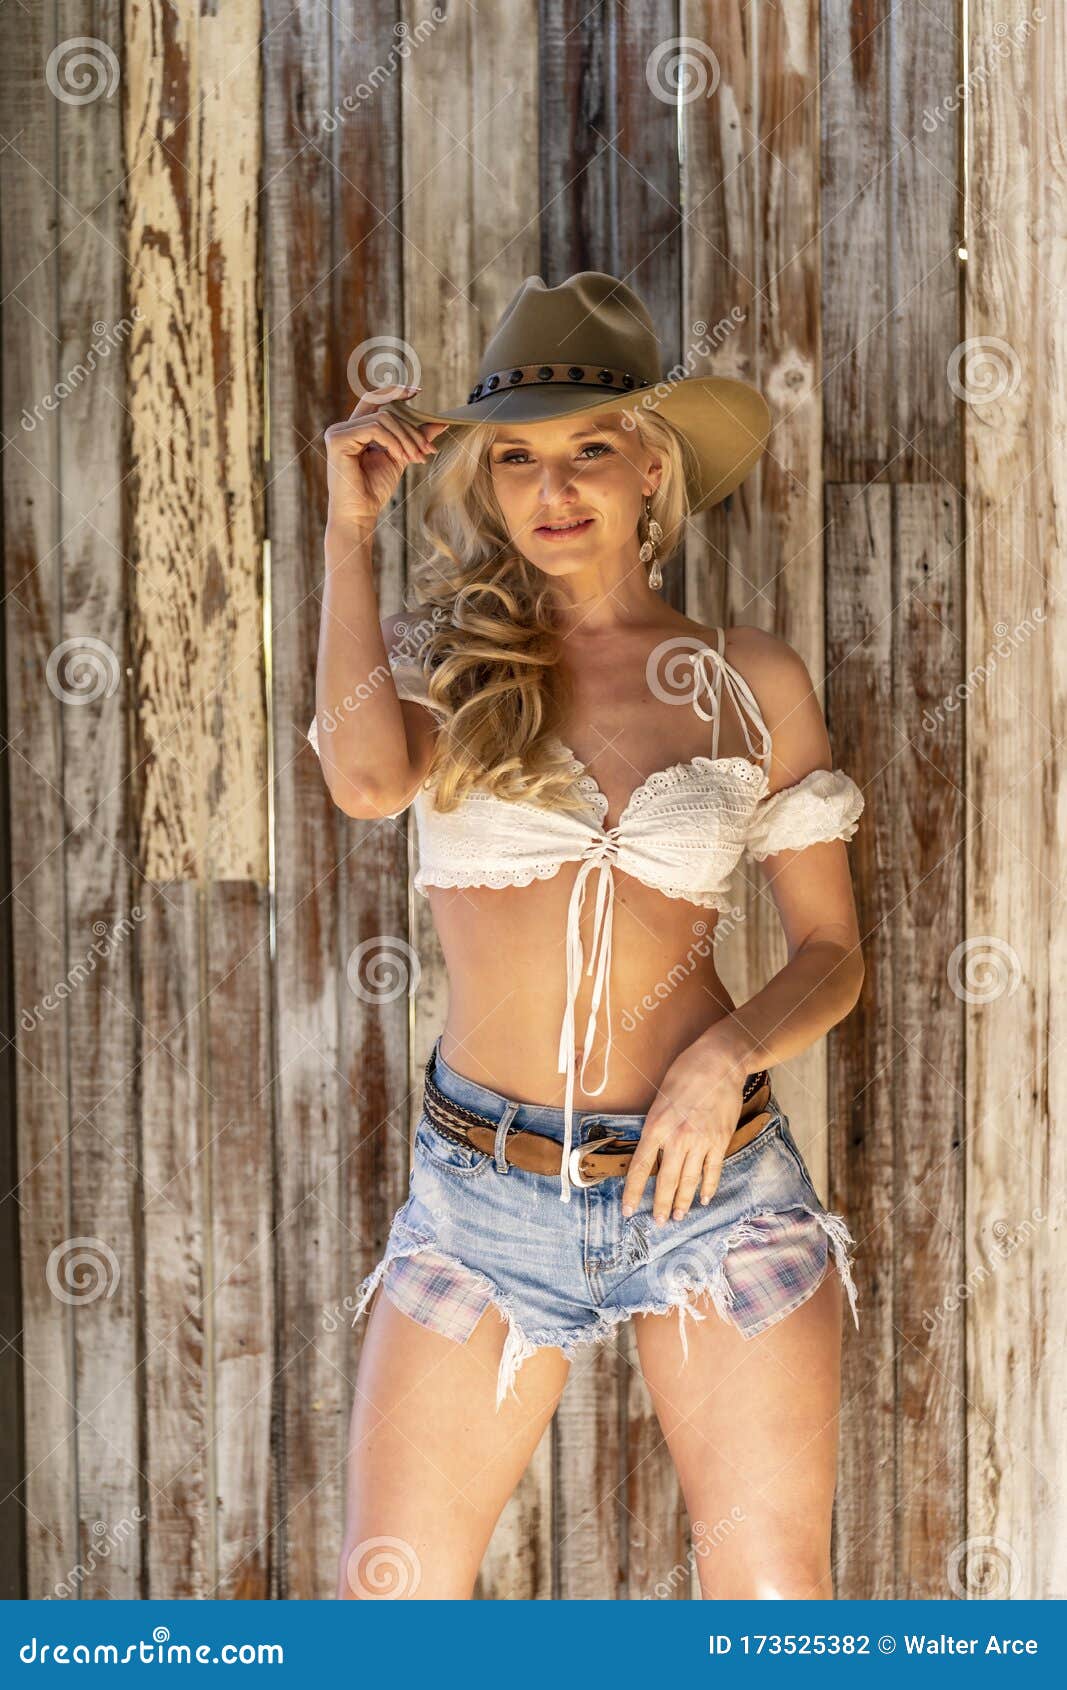 american blonde teen cowgirl hot photo